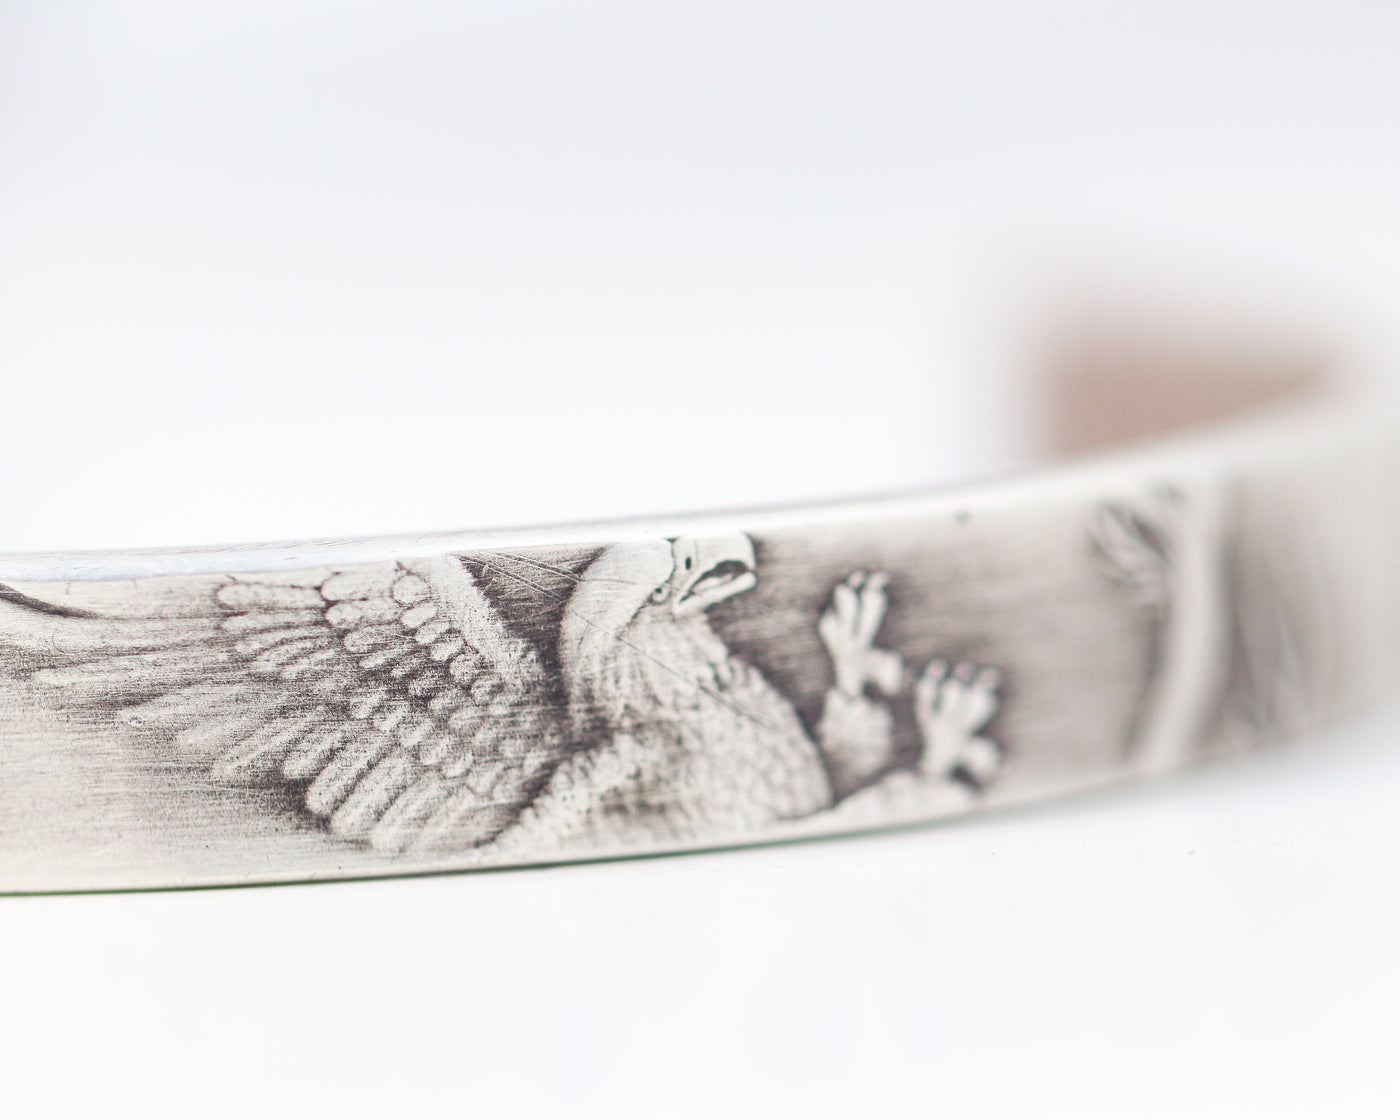 999 Silver Cuff Bracelet American Eagle